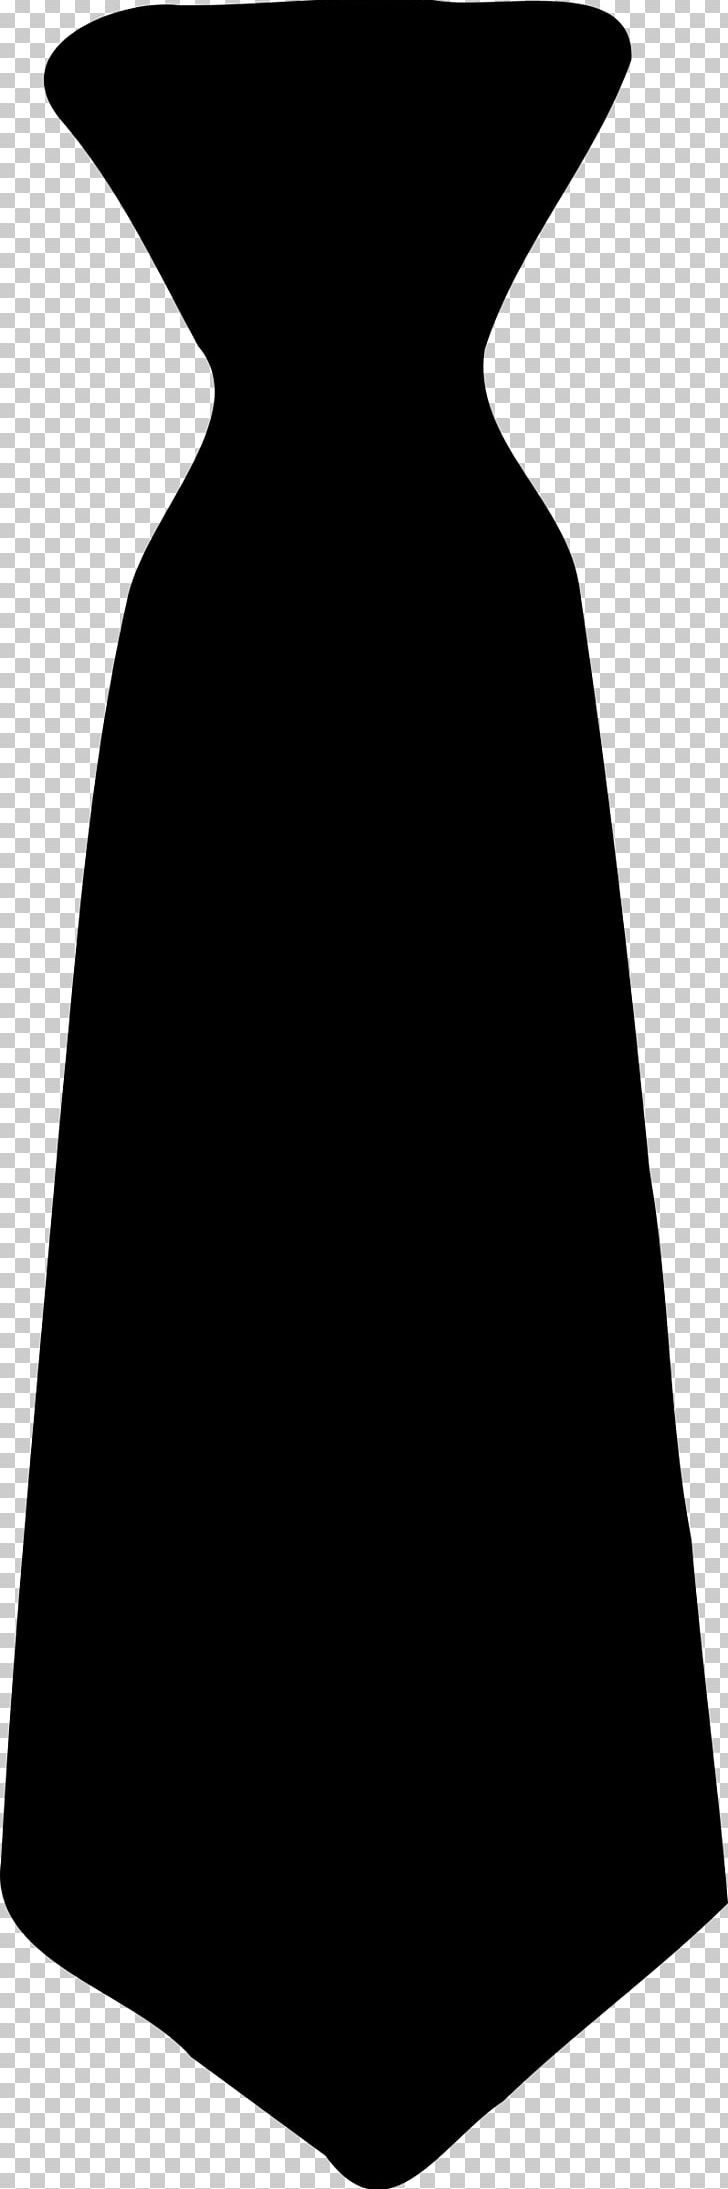 Necktie Bow Tie Black Tie PNG, Clipart, Black, Black And White, Black Tie, Bow Tie, Clip Art Free PNG Download